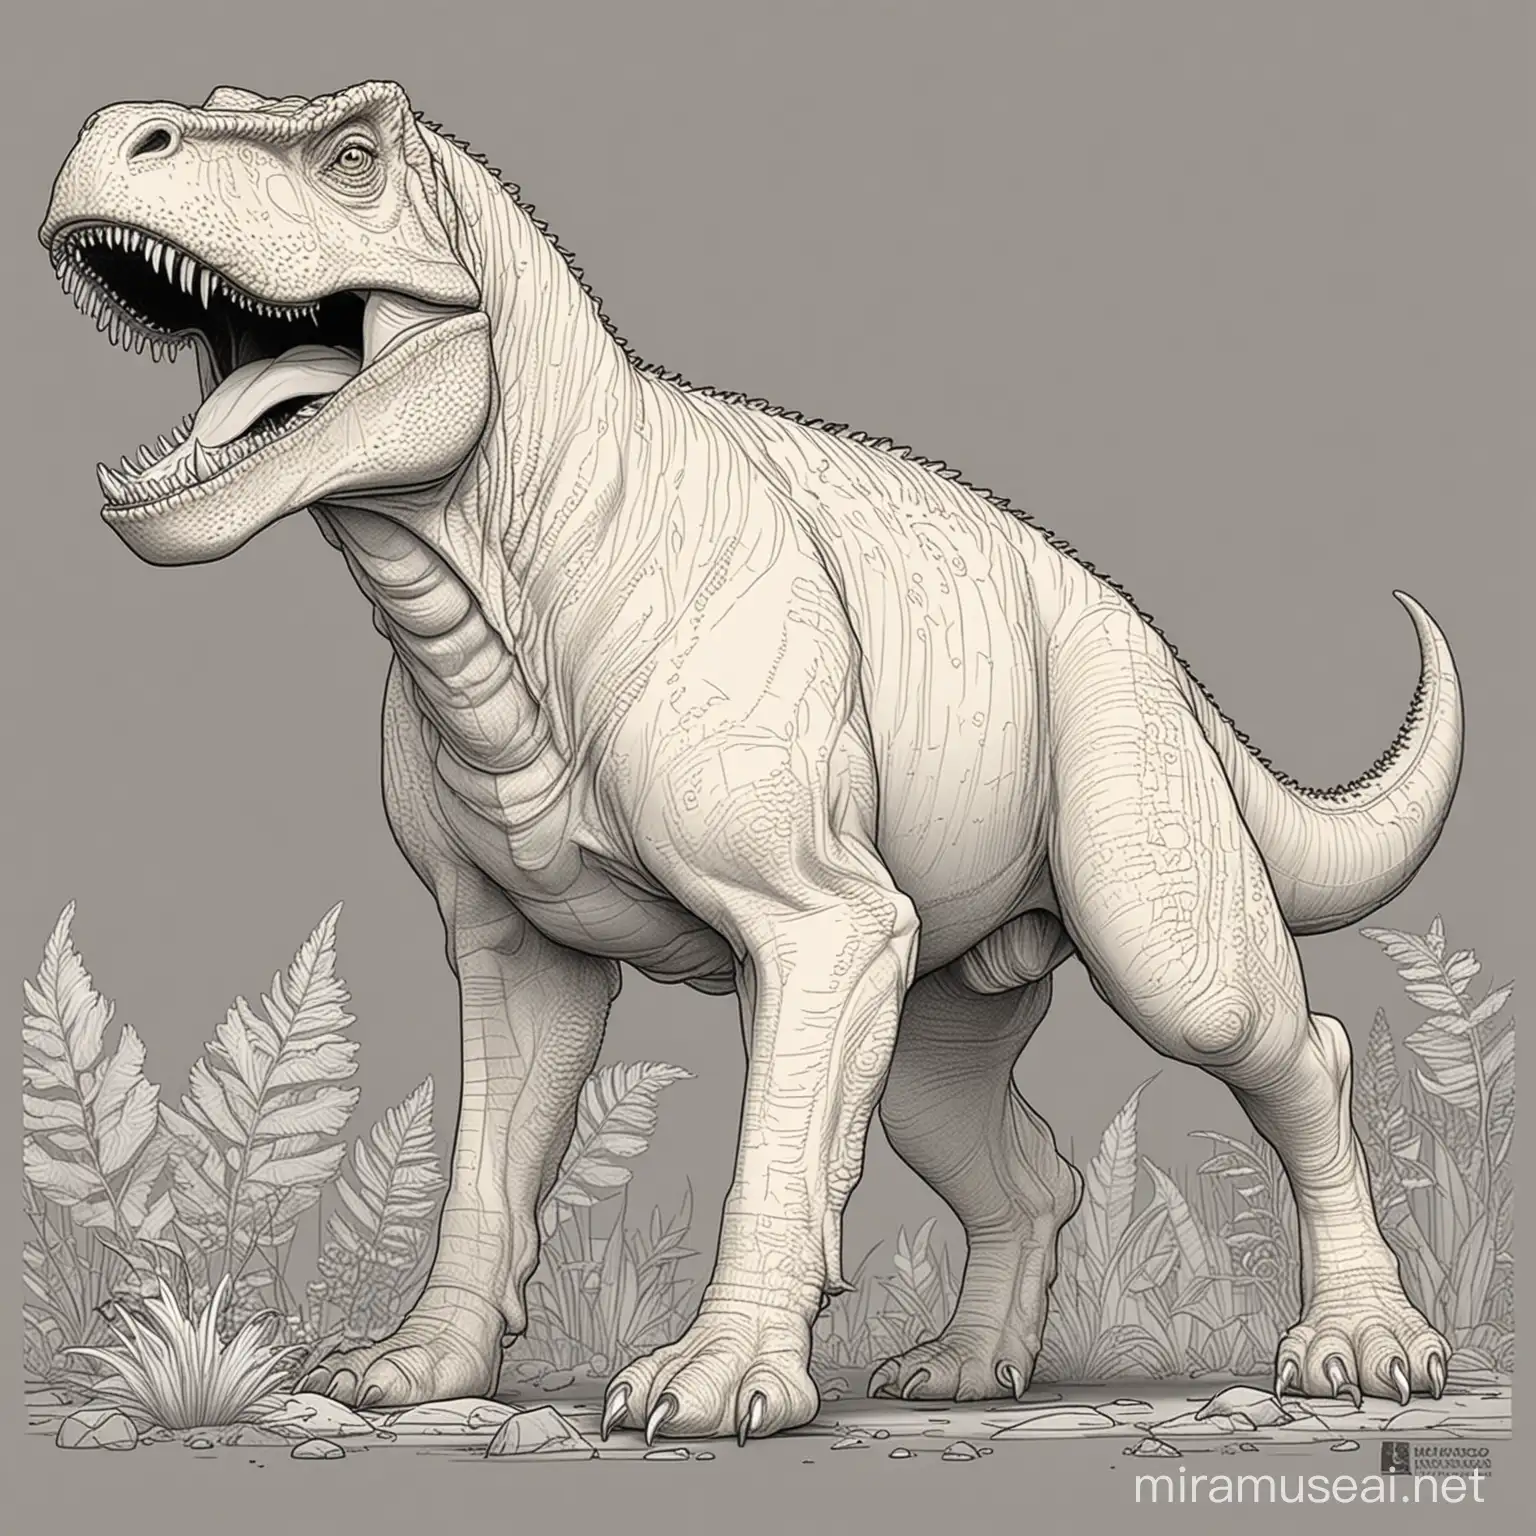 Cartoon Coloring Page Tyrannosaurus Rex Mixed with Golden Retriever